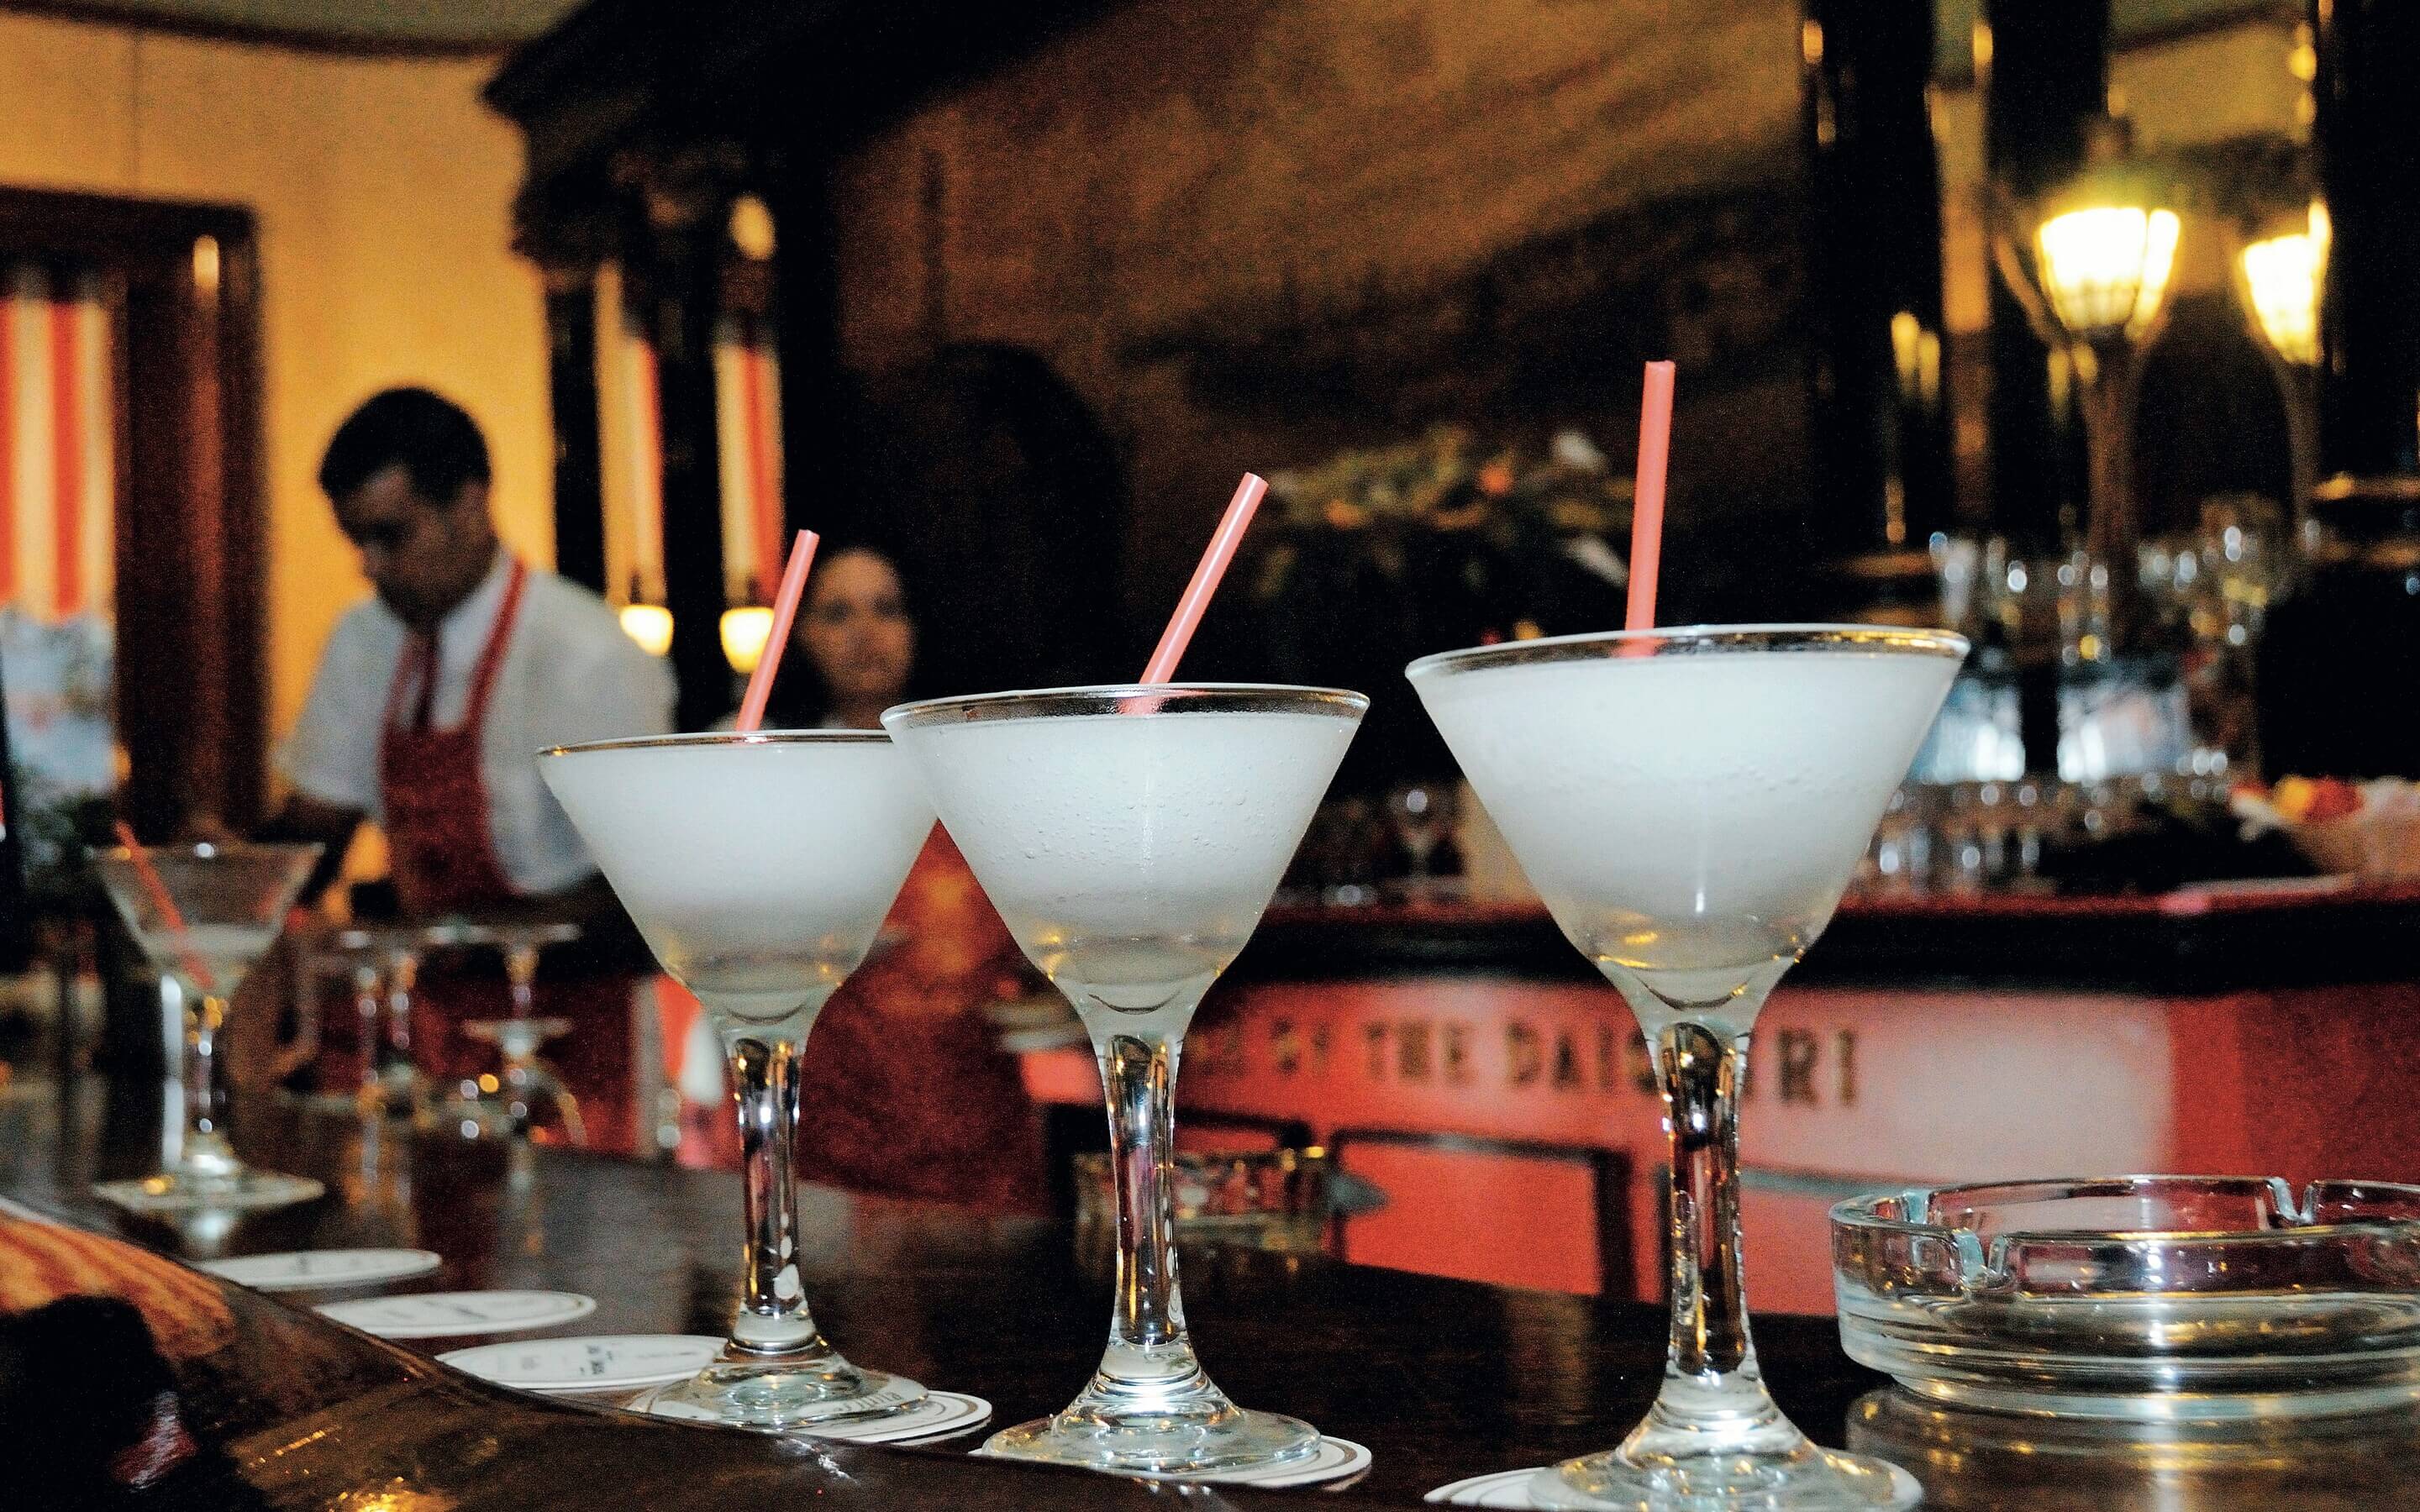 Drink Daiquiri: Things To Do In Havana